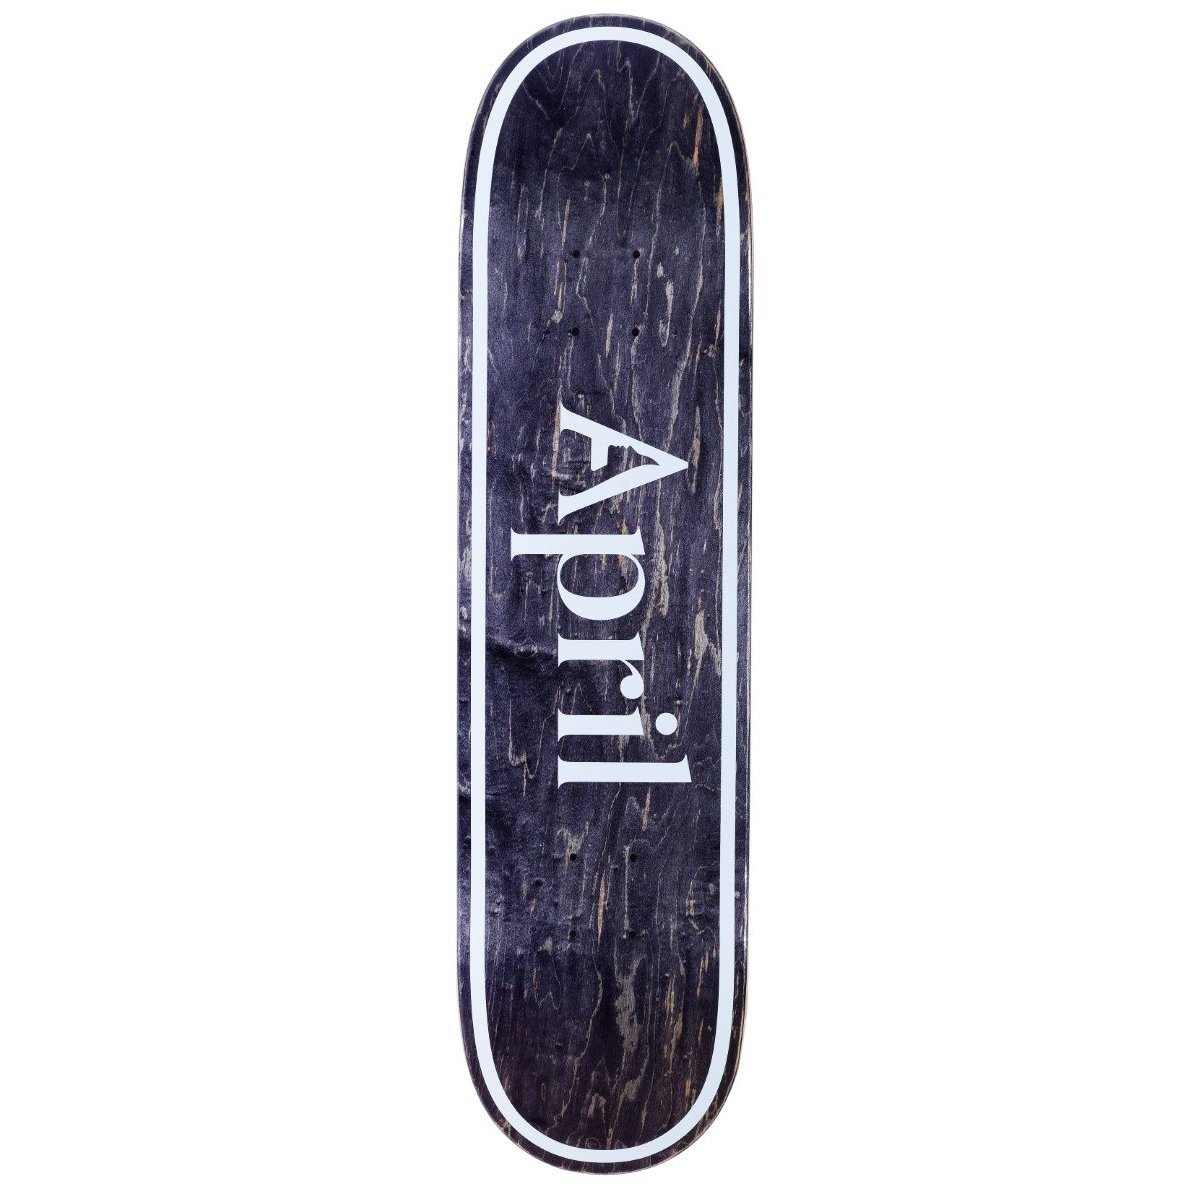 APRIL プロモデル 7.5インチ デッキ スケボー エイプリ パグ 